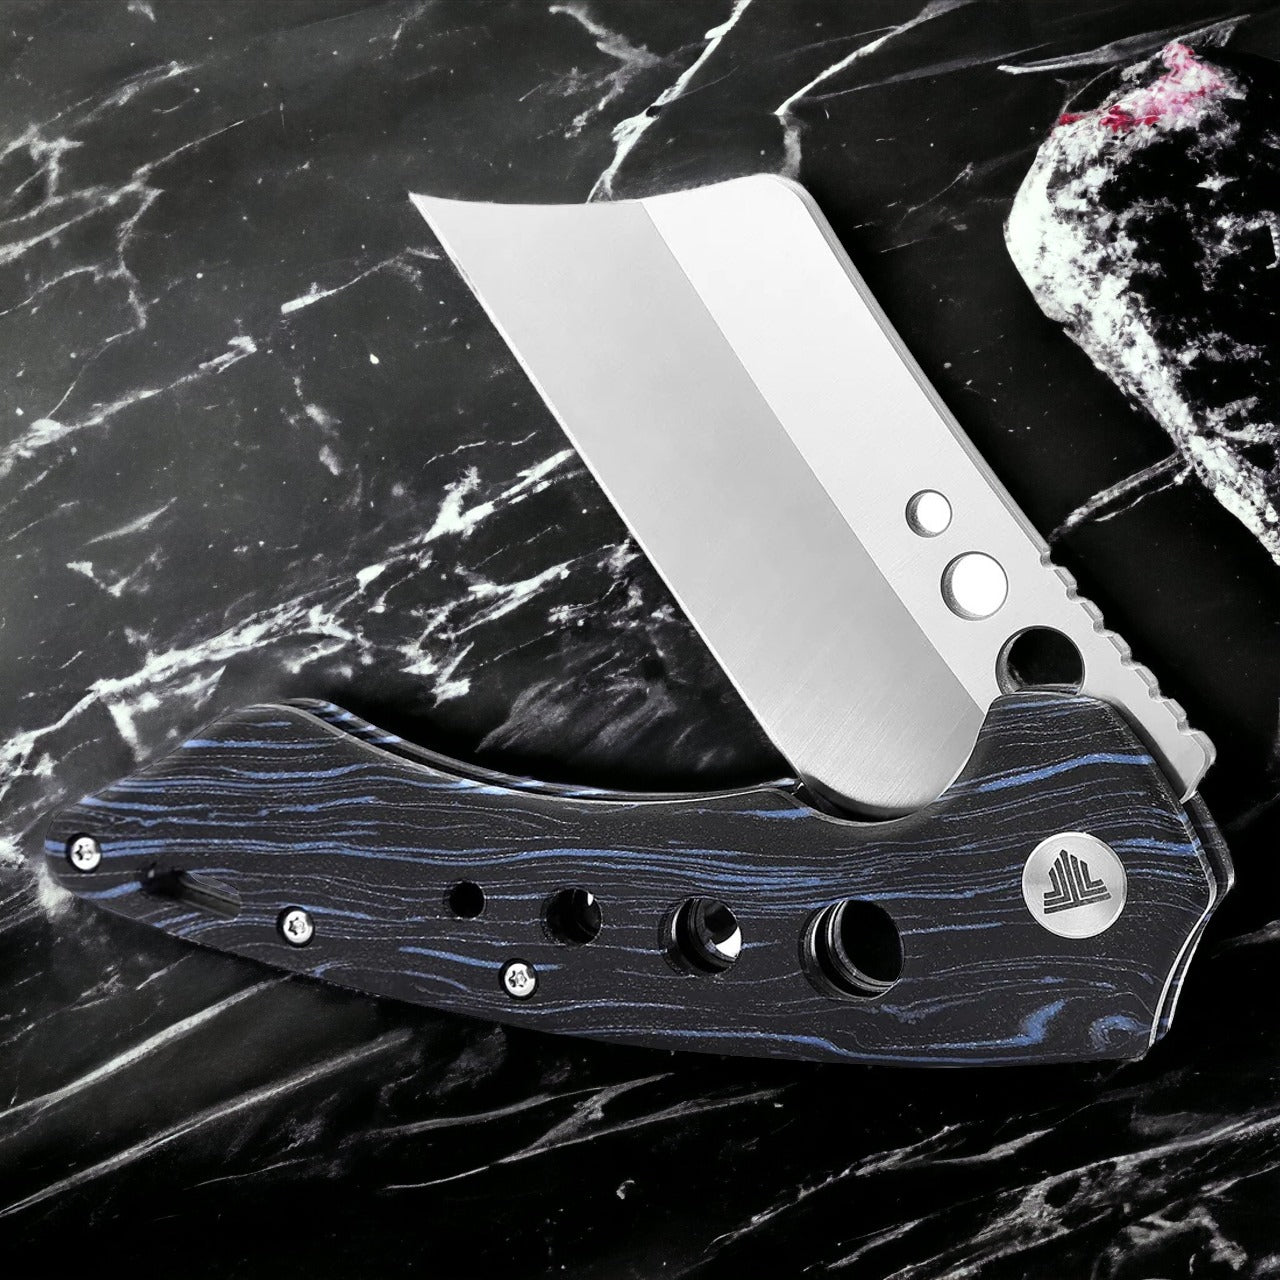 TRIVISA MENSAE-03BB FOLDING KNIFE BLUE/BLACK G10 HANDLE 154CM CLEAVER PLAIN EDGE SATIN FINISH